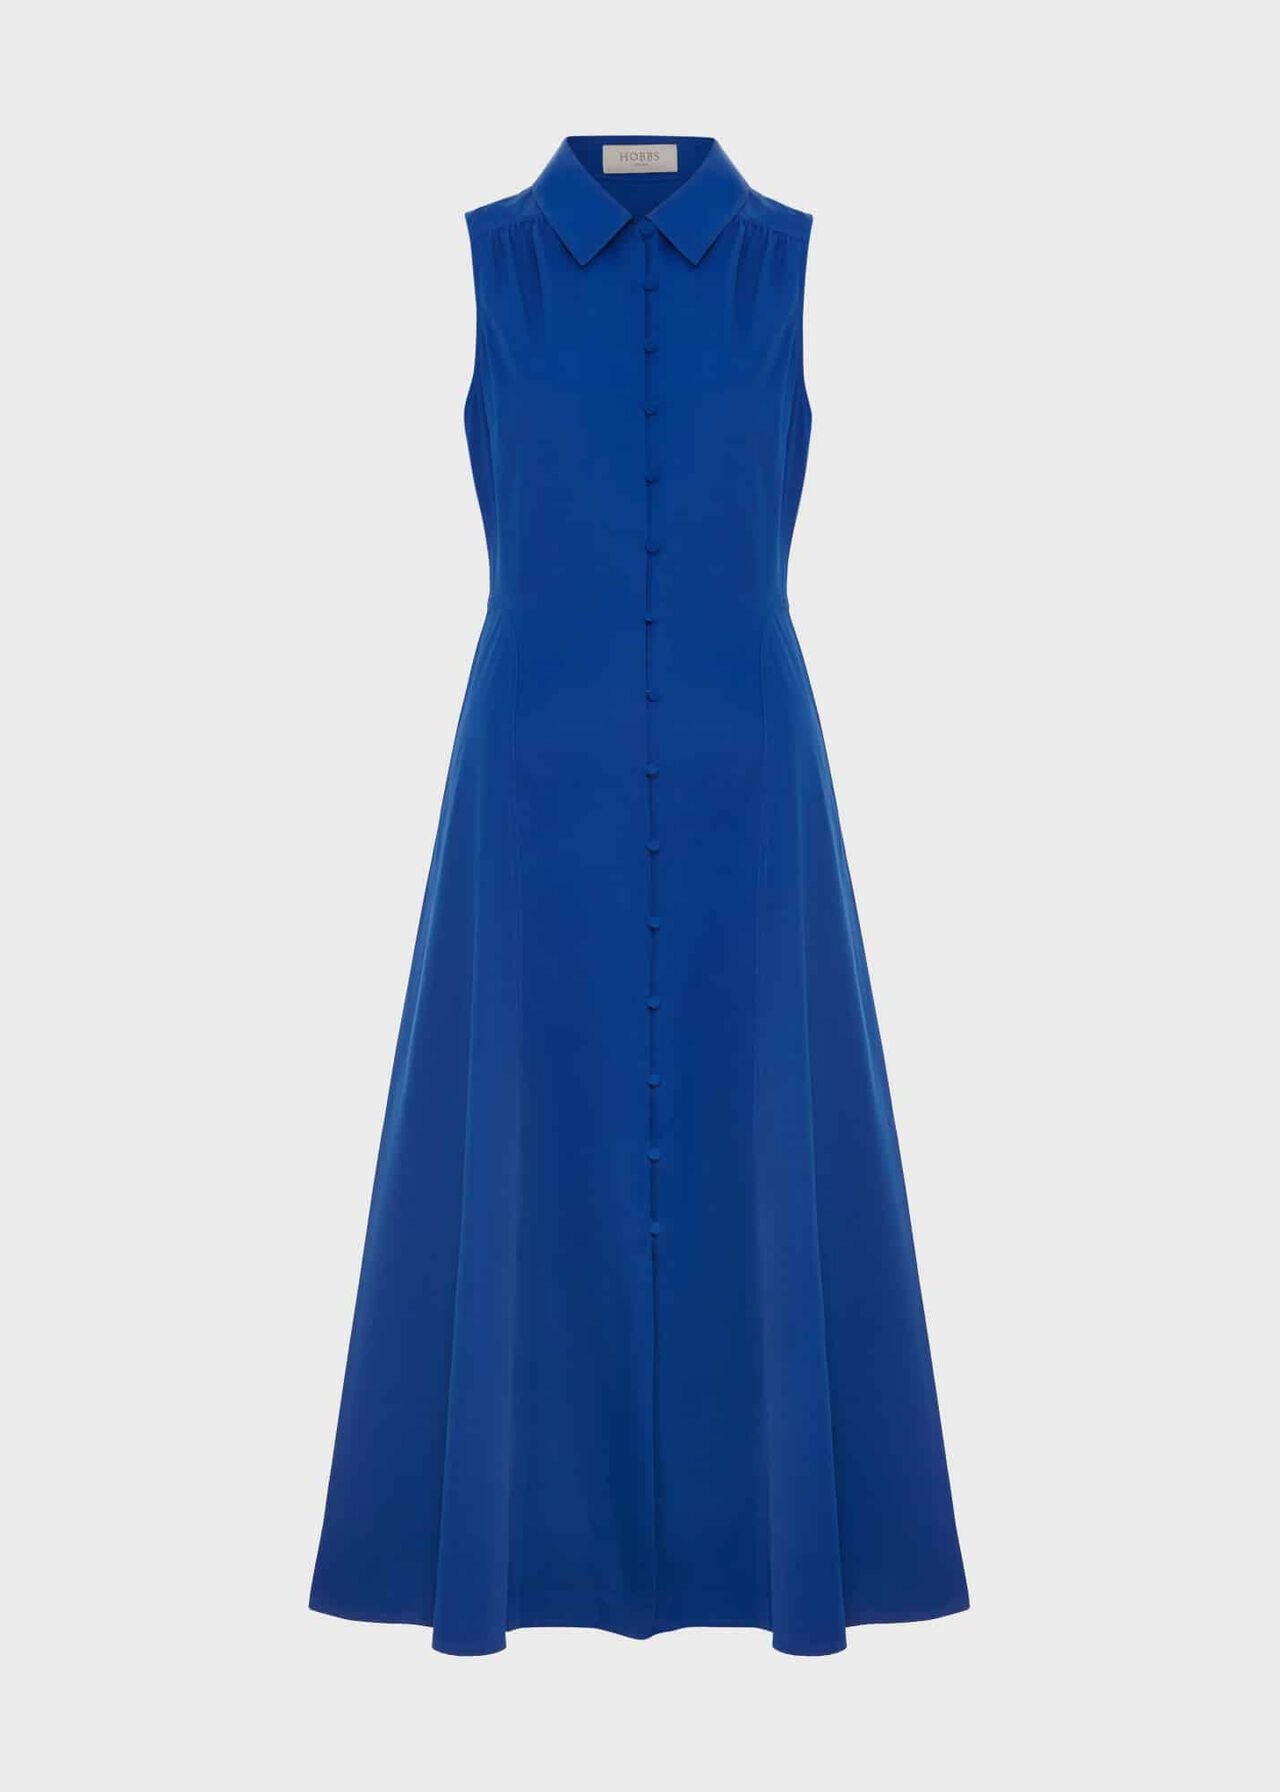 Cathleen Dress With Cotton, Lapis Blue, hi-res